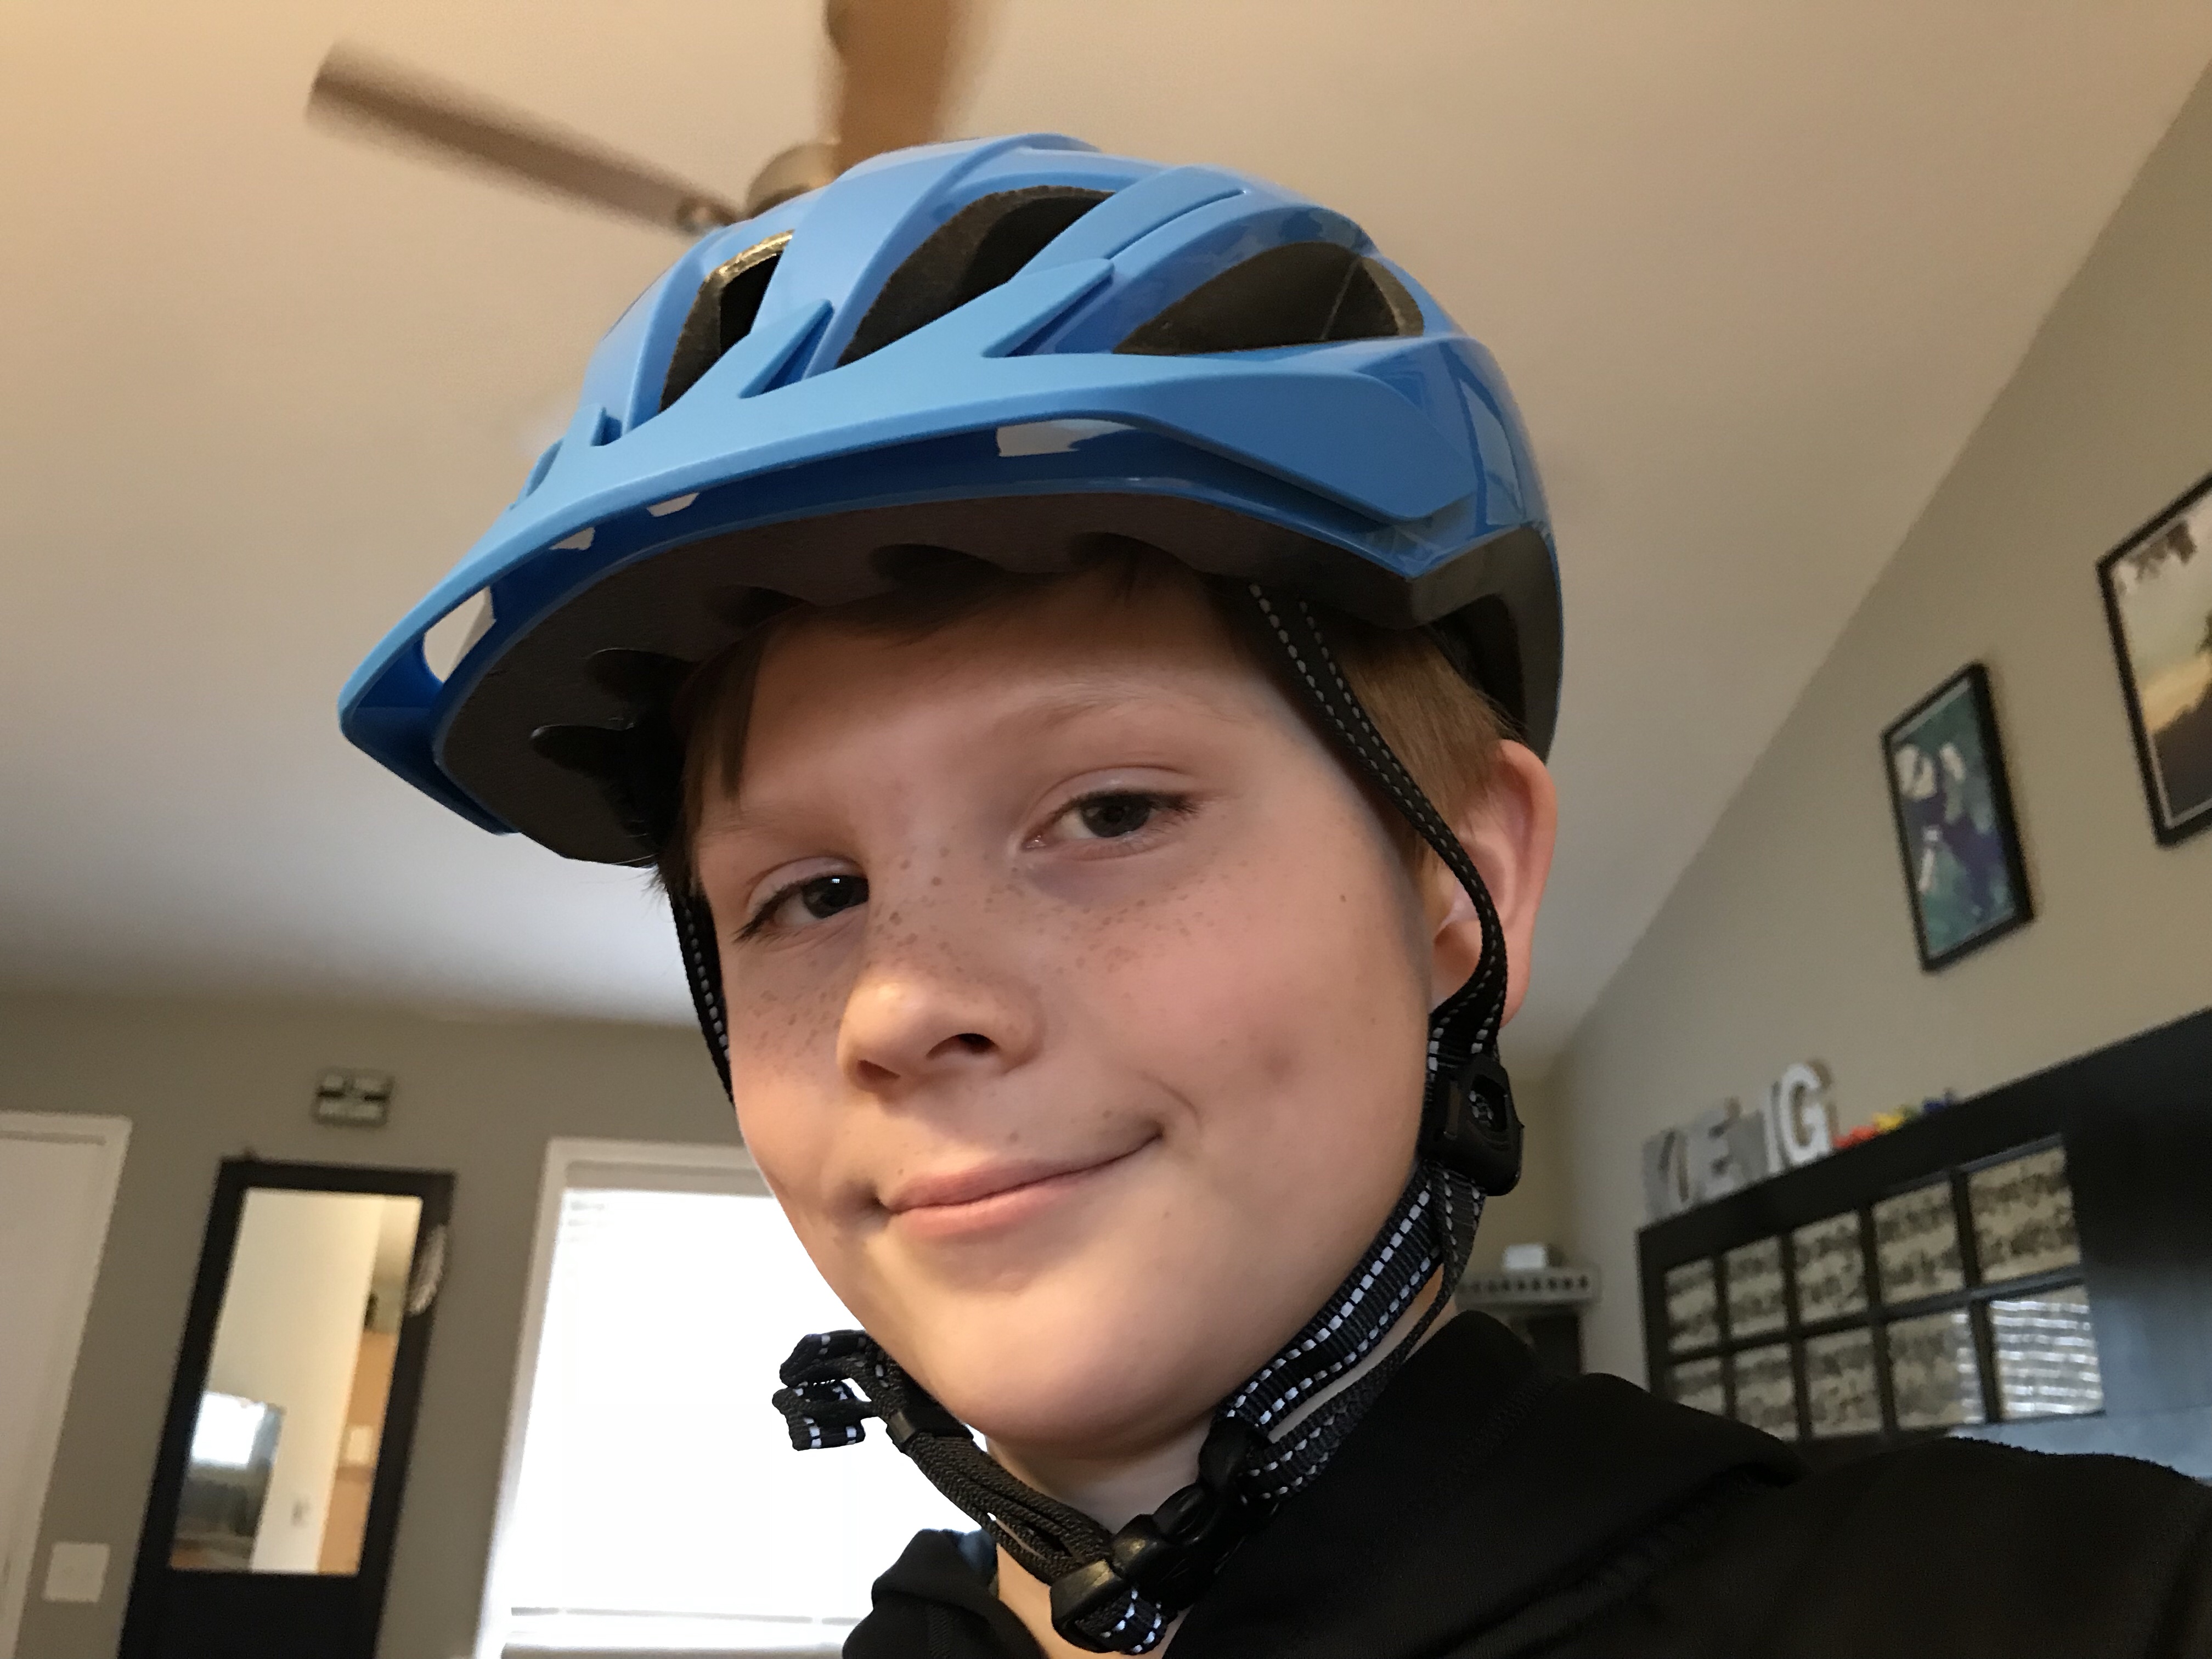 Bontrager Solstice Mips Youth Bike Helmet Review